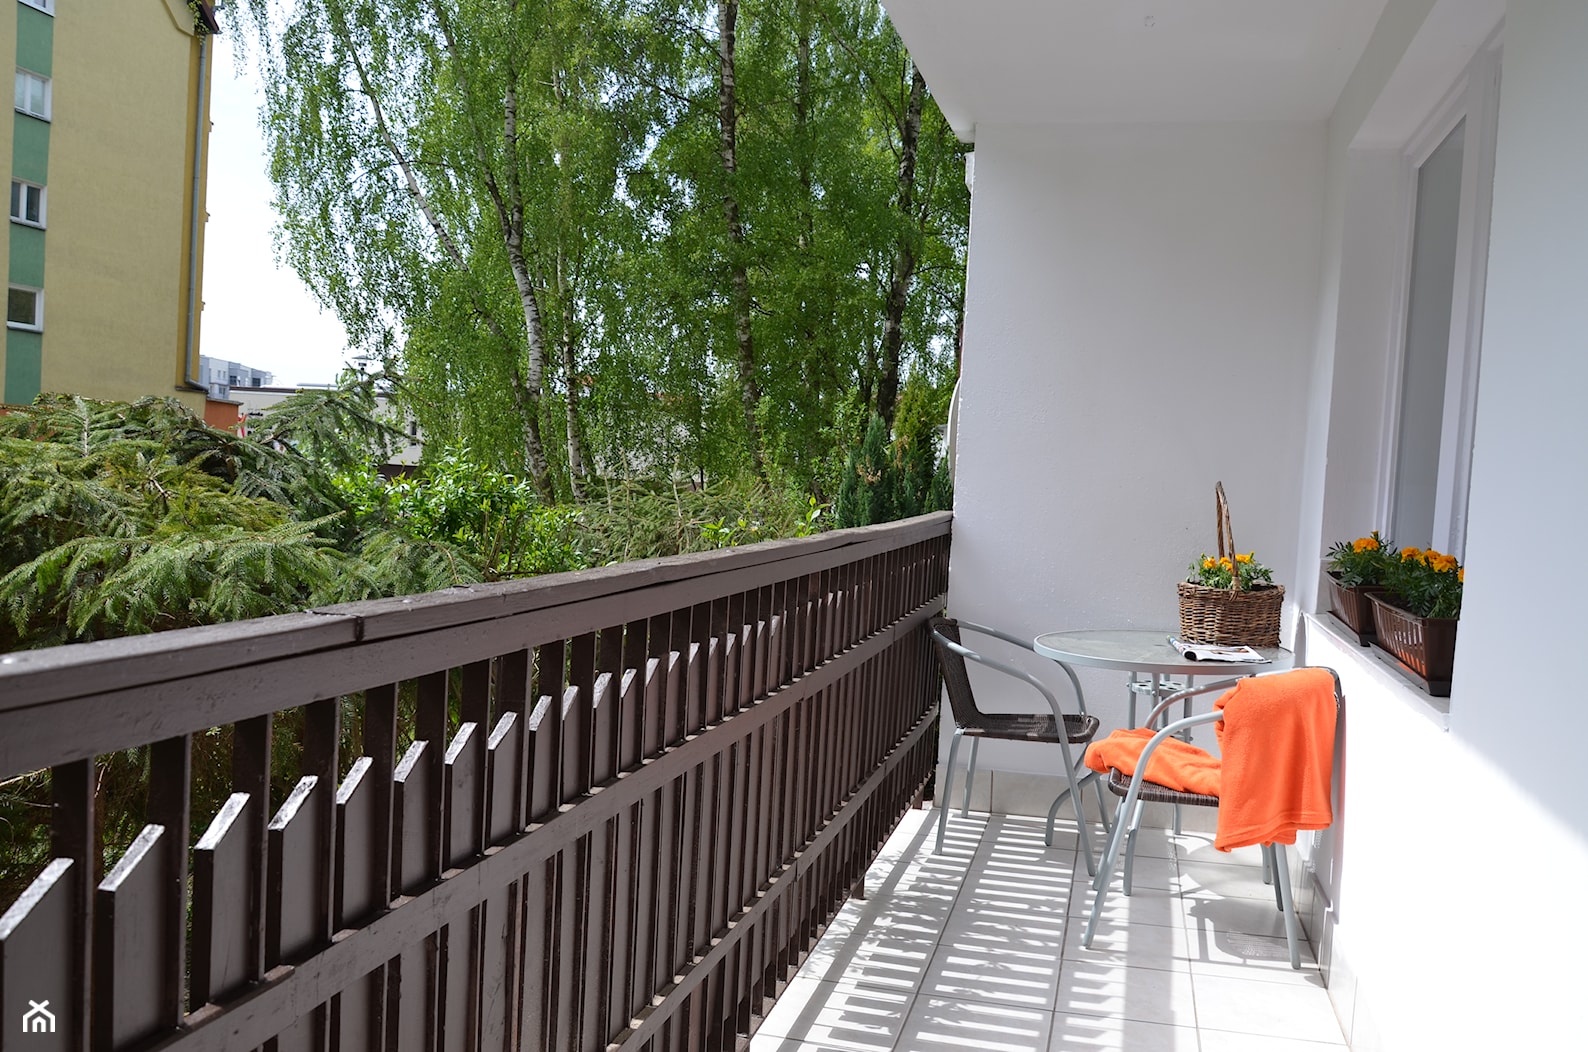 Balkon z miejscem na odpoczynek - zdjęcie od anuska7 - Homebook